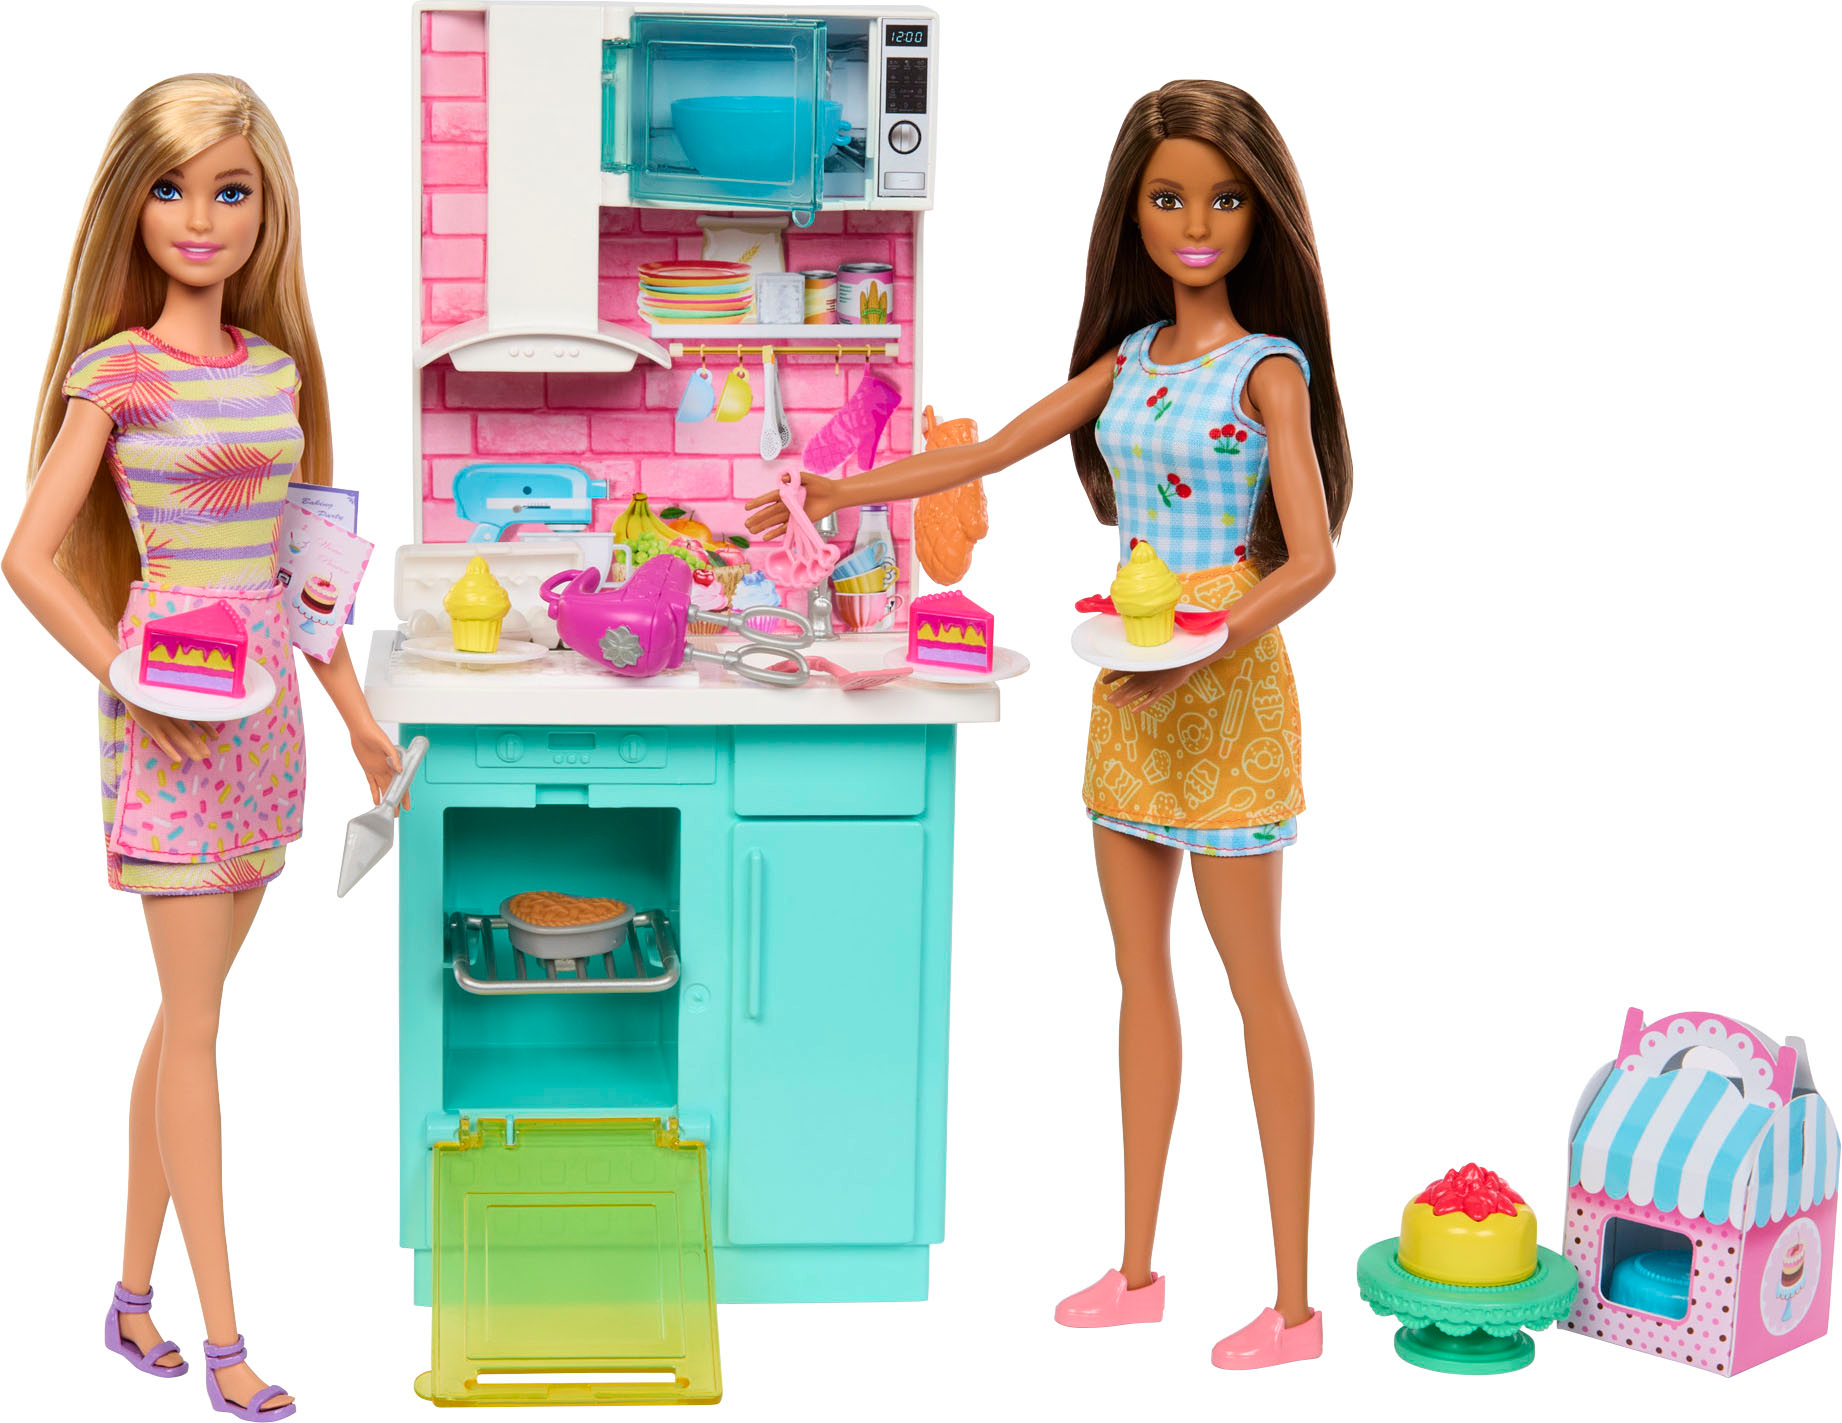 Barbie Celebration Fun Baking & Kitchen with Dolls Playset HJY94 - Best Buy